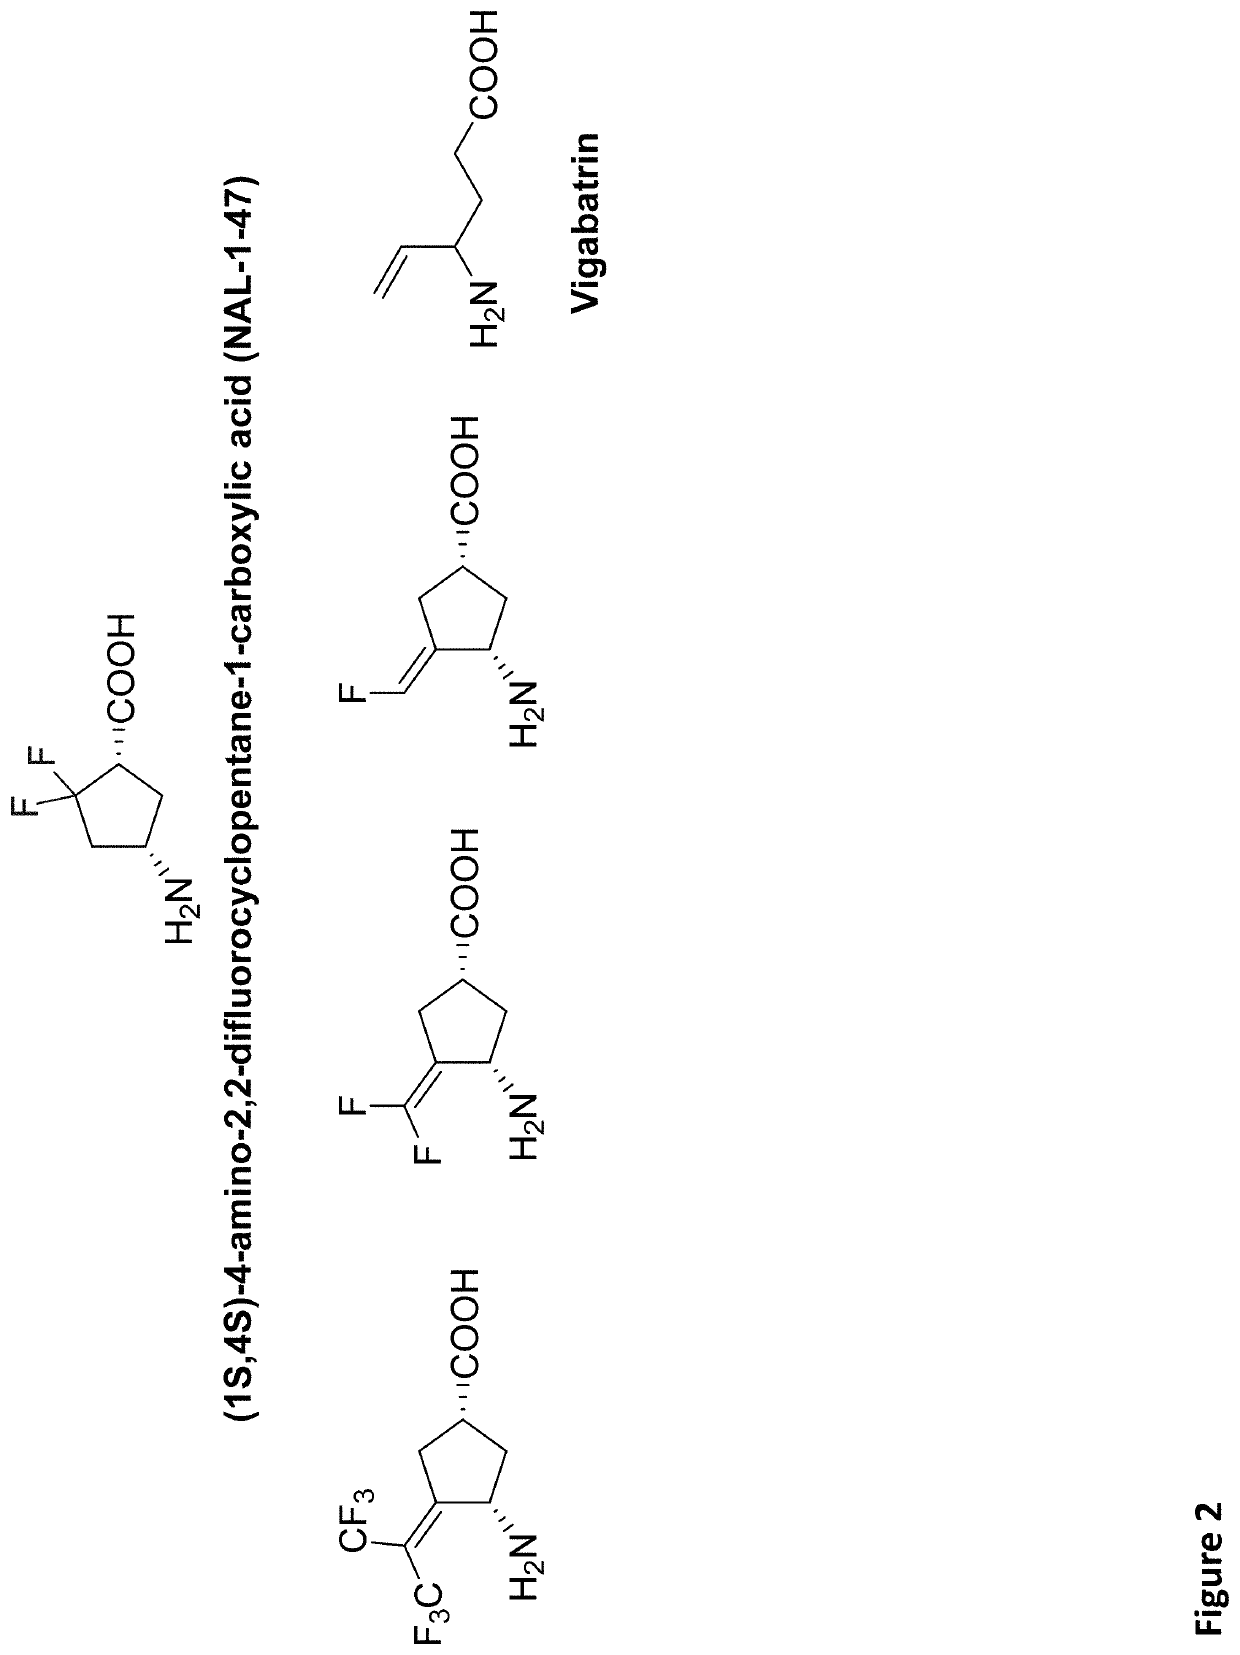 2-difluoro substituted 4-aminocyclopentanecarboxylic acids as inhibitors of gamma-aminobutyric acid aminotransferase and human ornithine aminotransferase